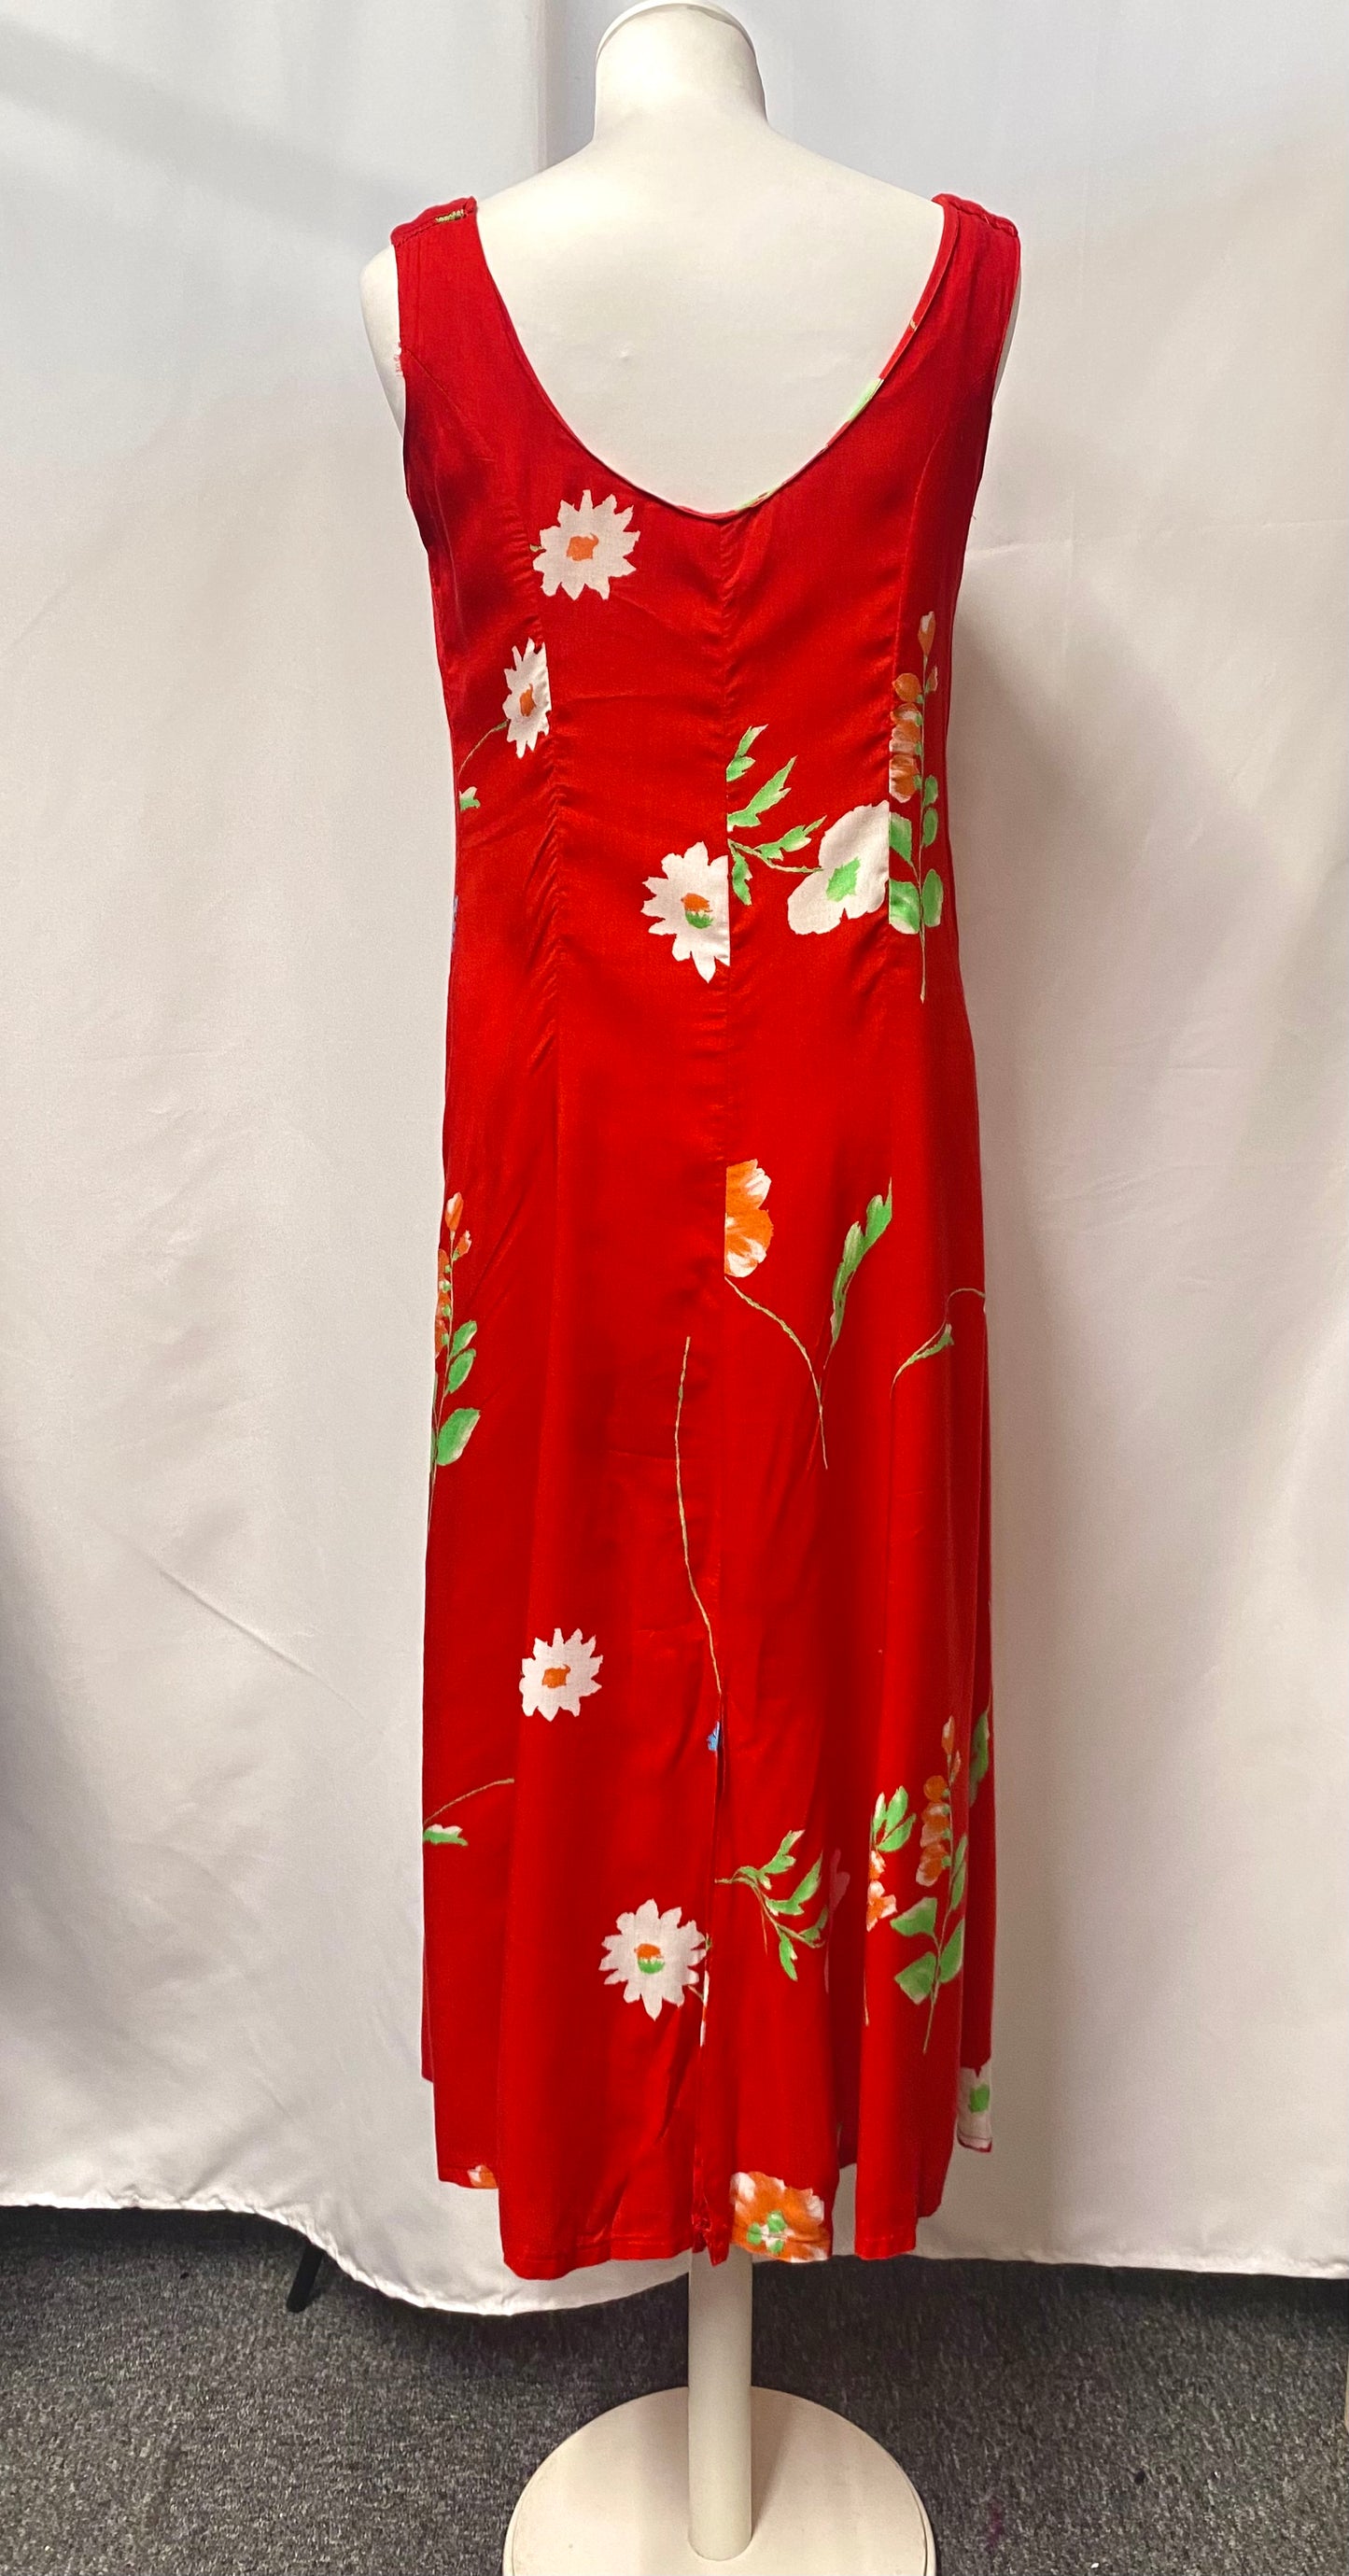 Vintage Unbranded Red Floral Sleeveless Festival Dress